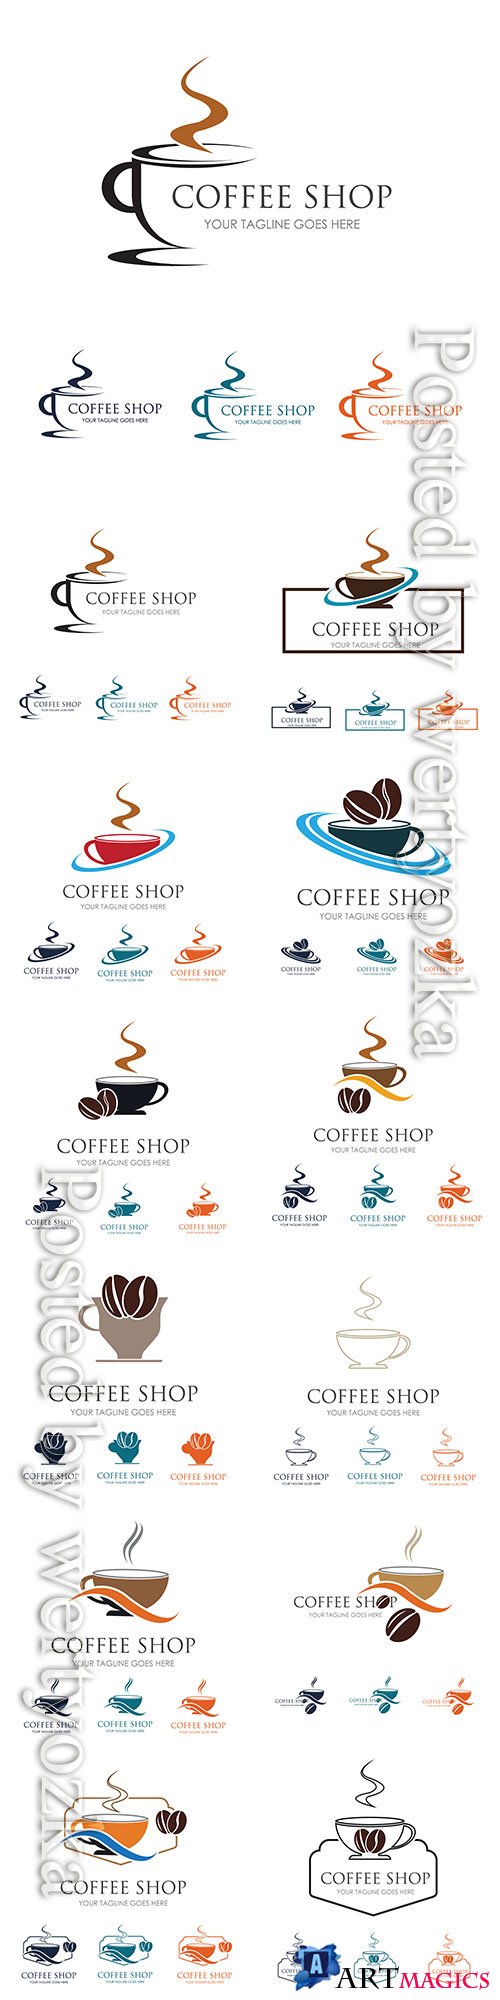 Coffee shop vector logo illustrations